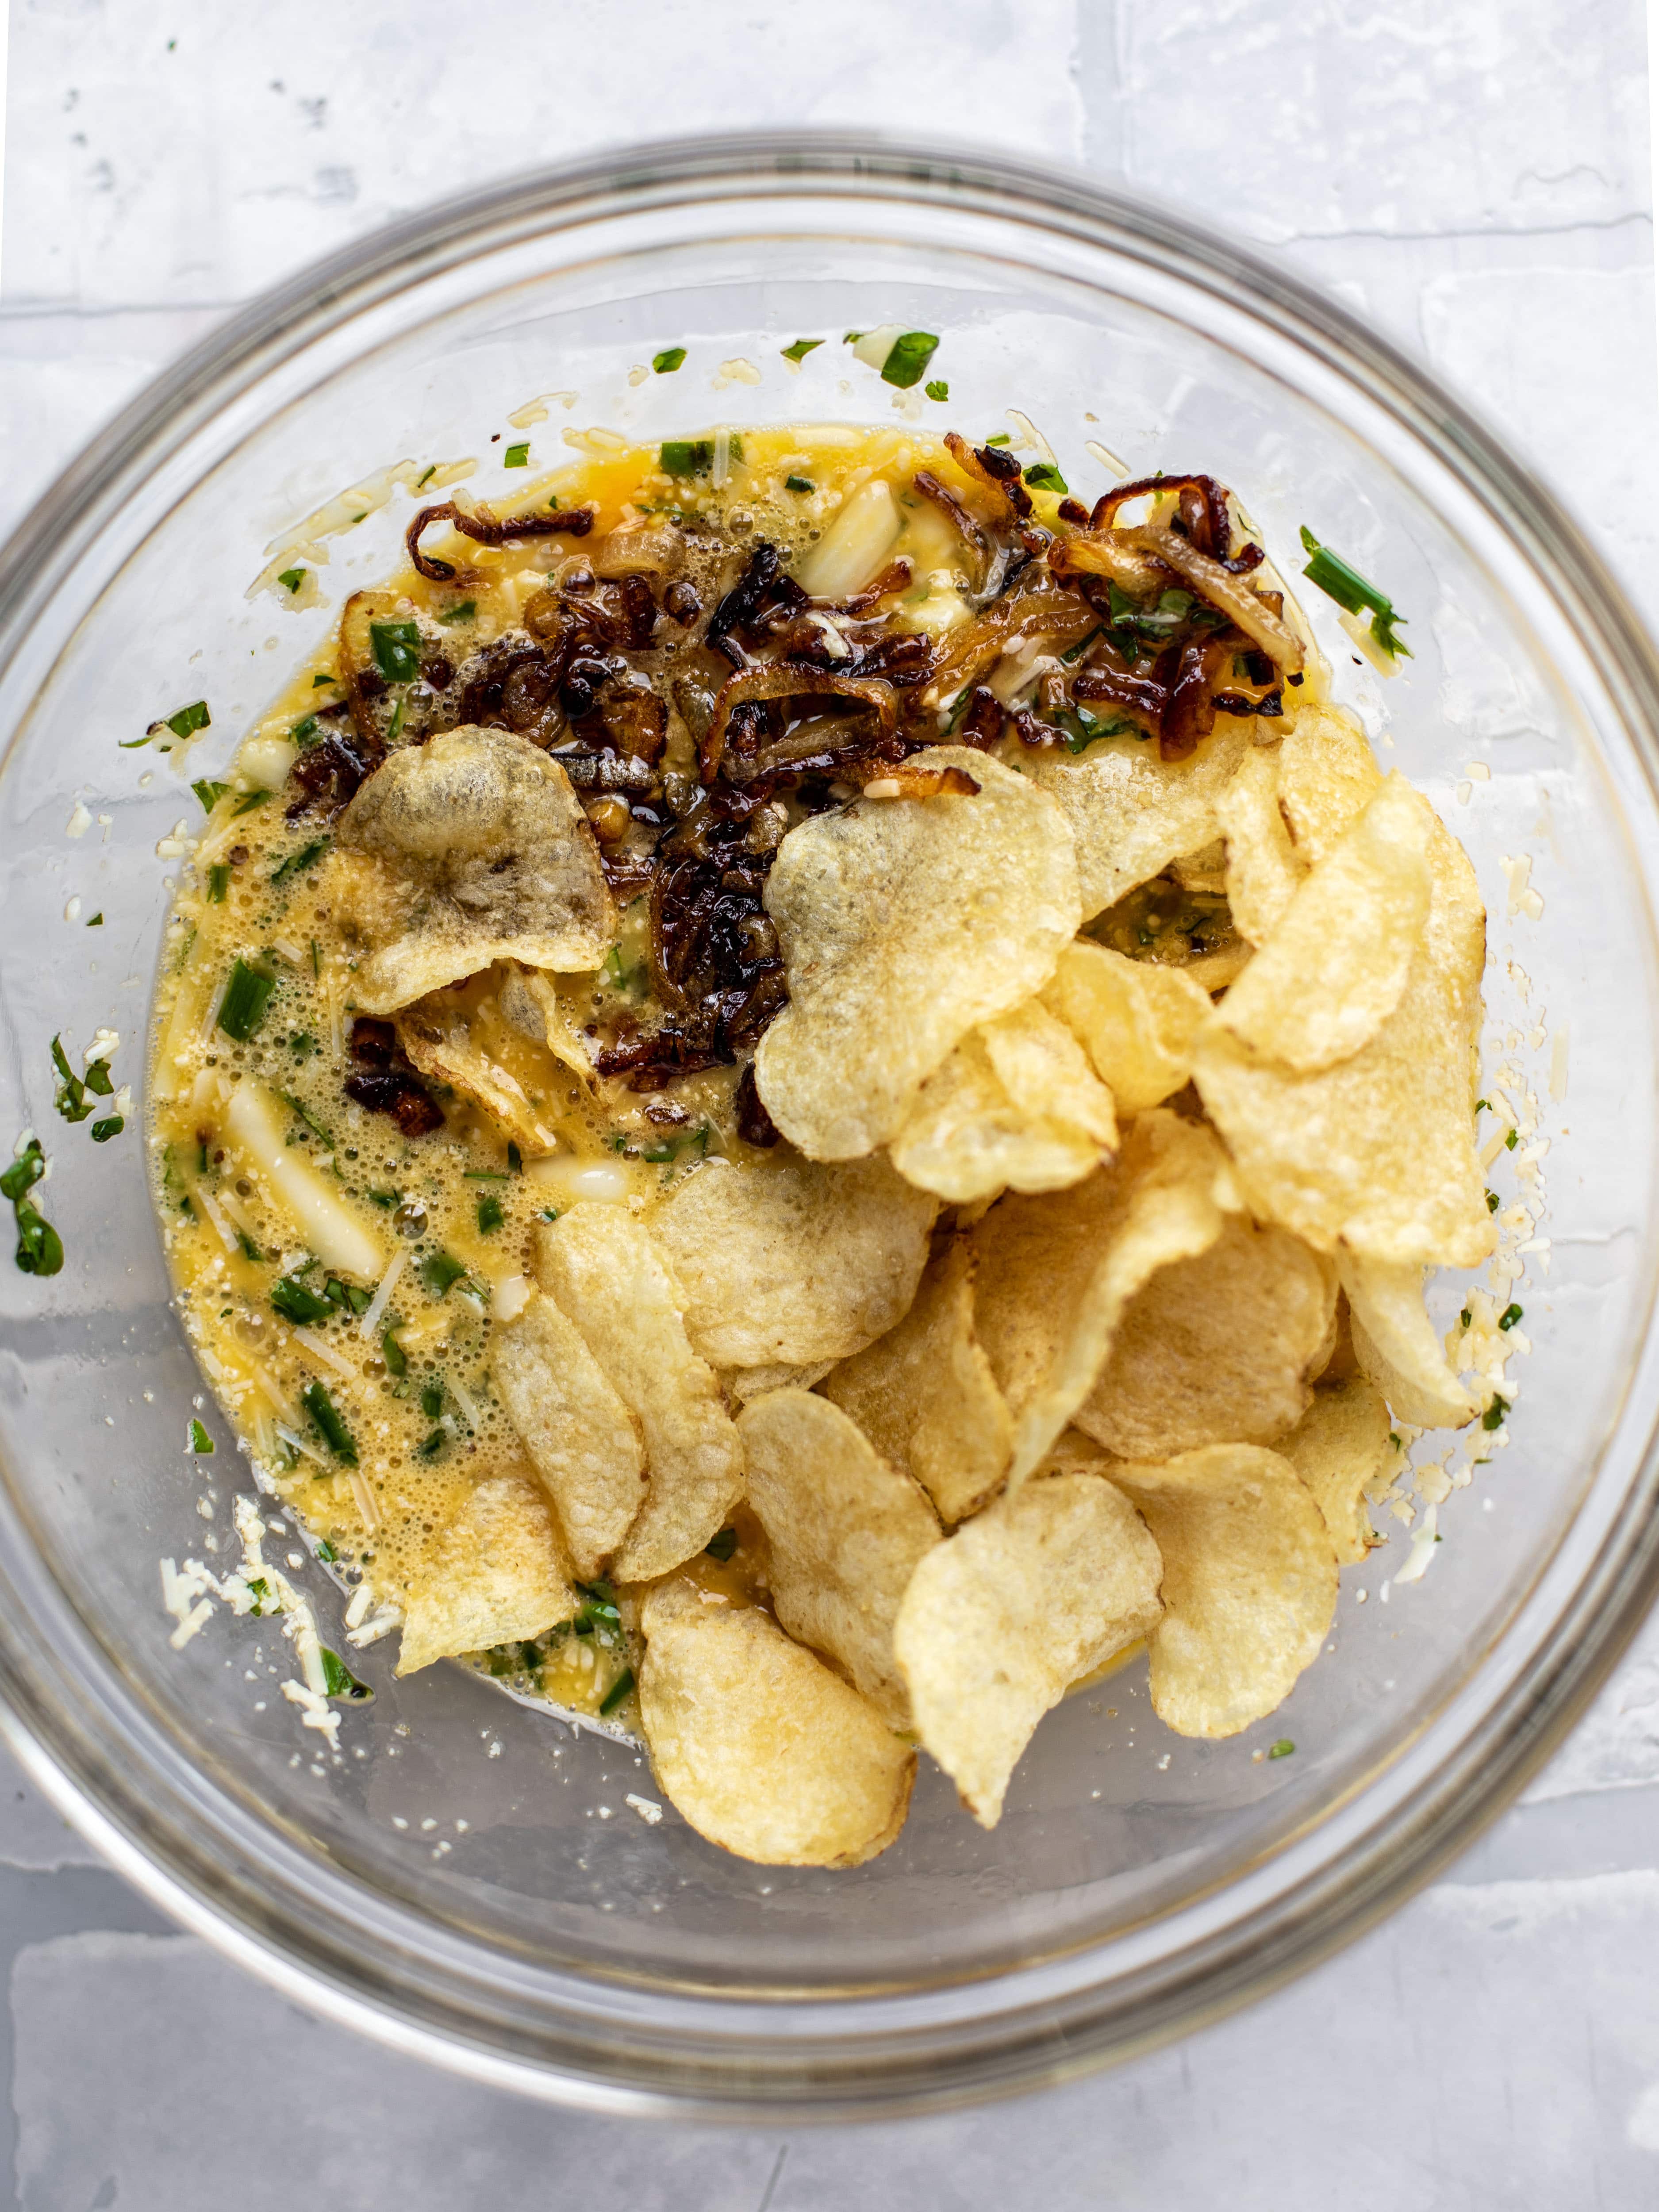 potato chips stirred into the frittata mixture